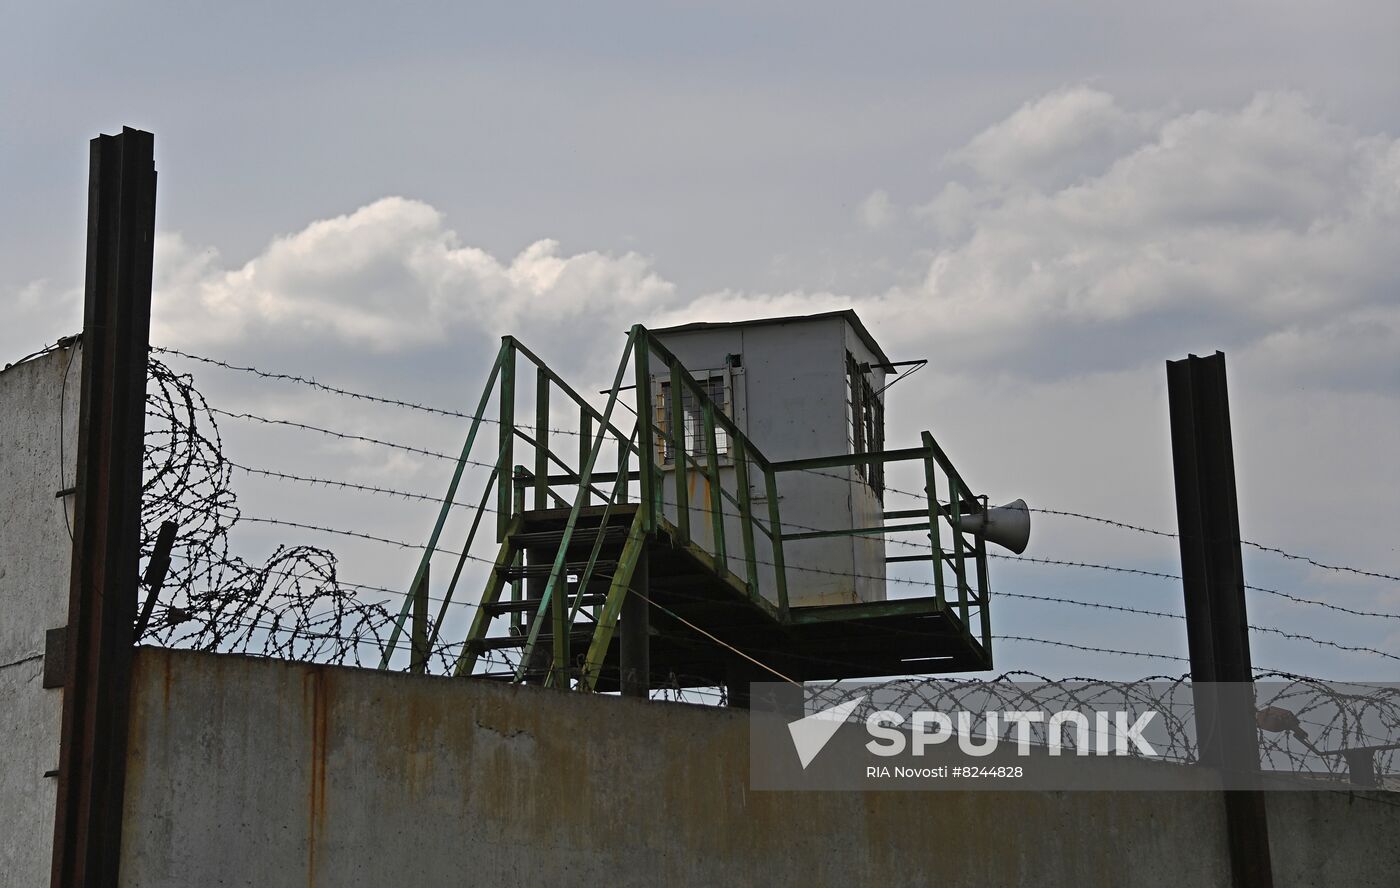 DPR Russia Ukraine Military Operation Prison Shelling